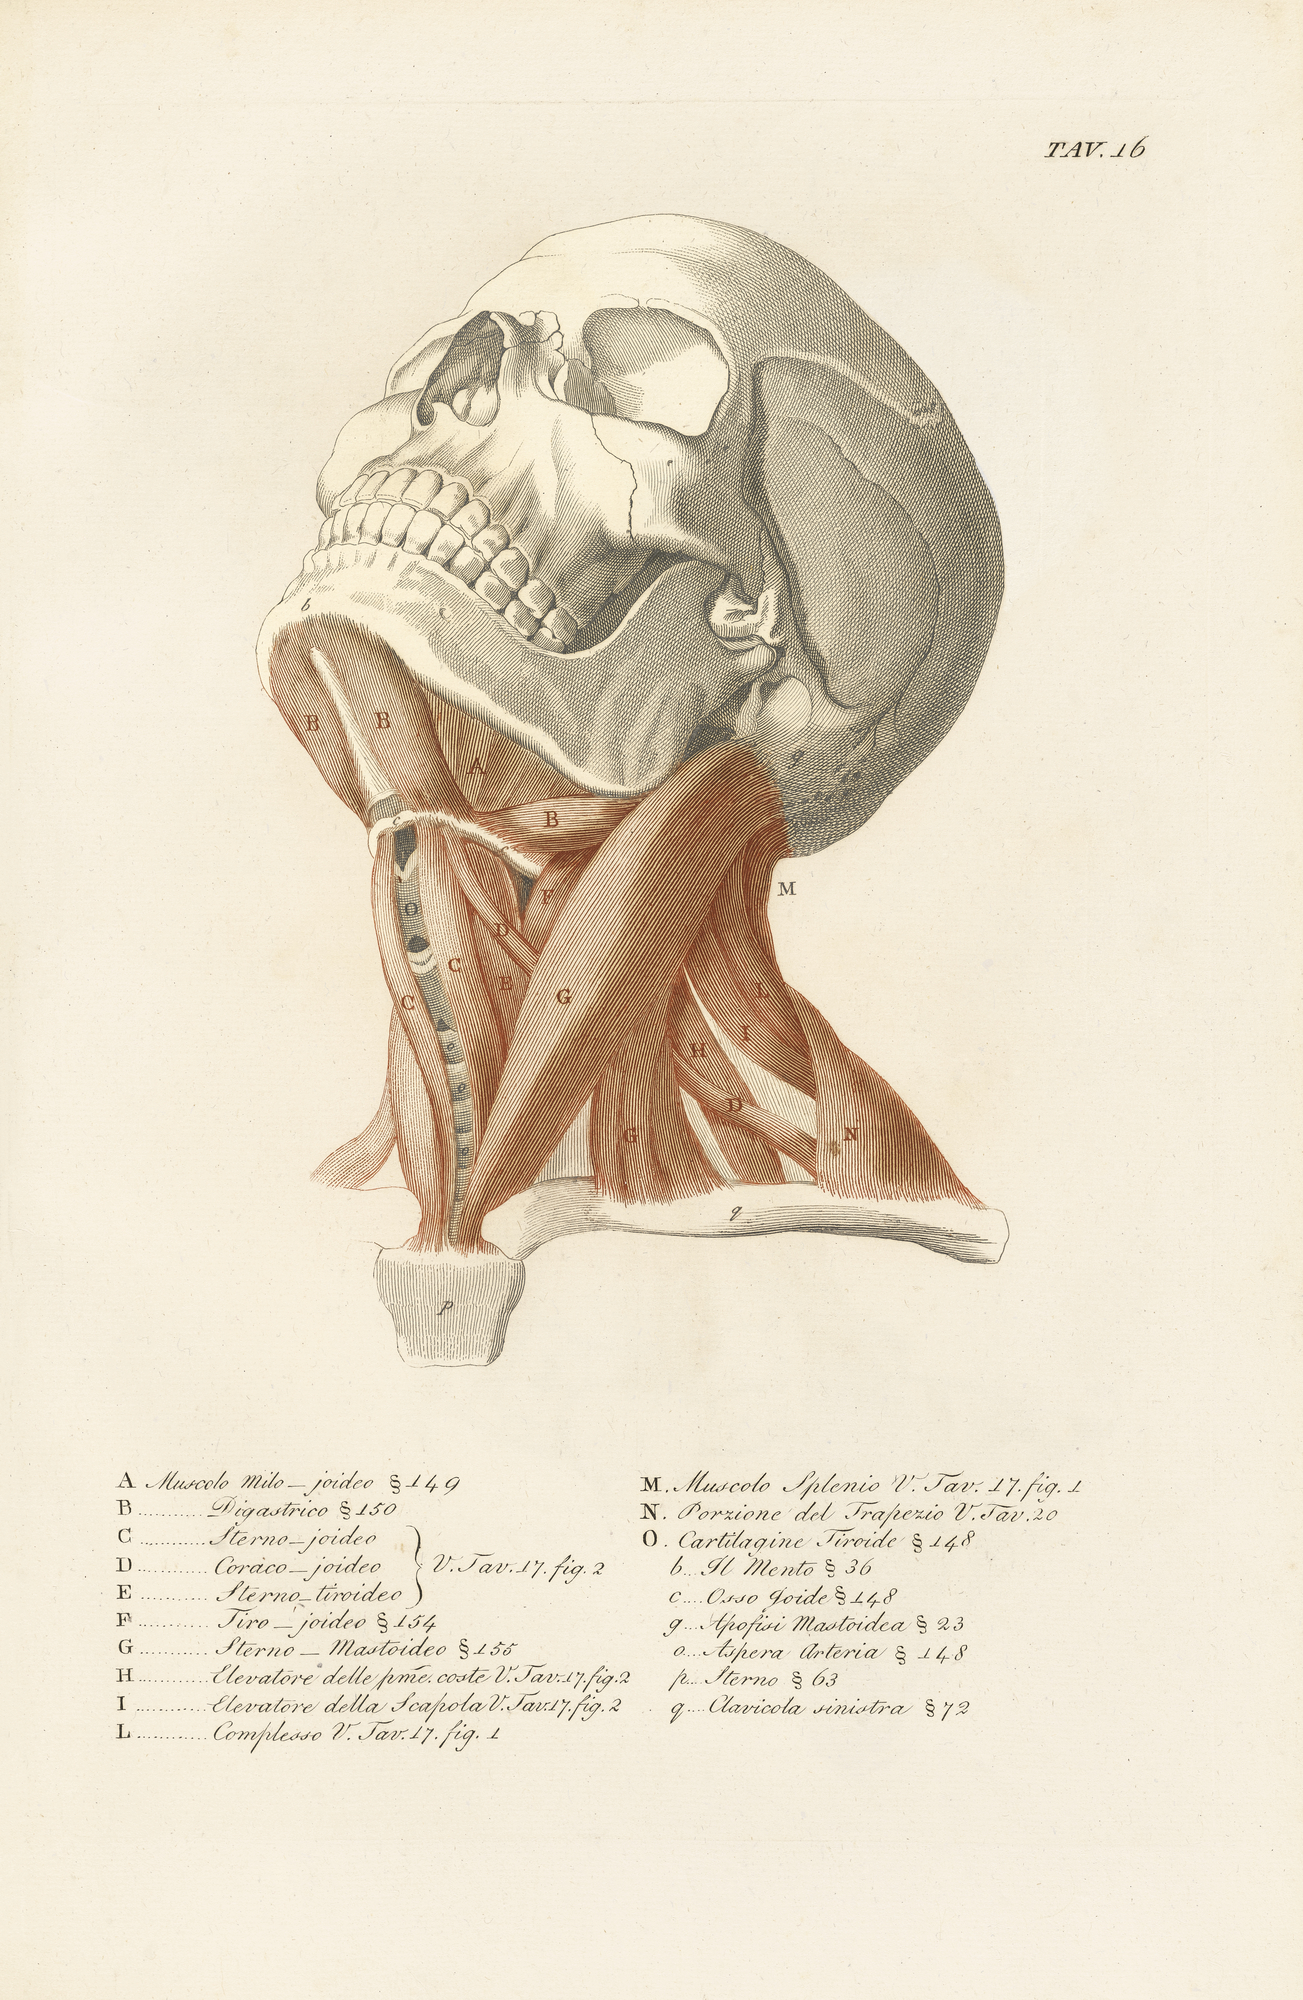 Anatomical drawings